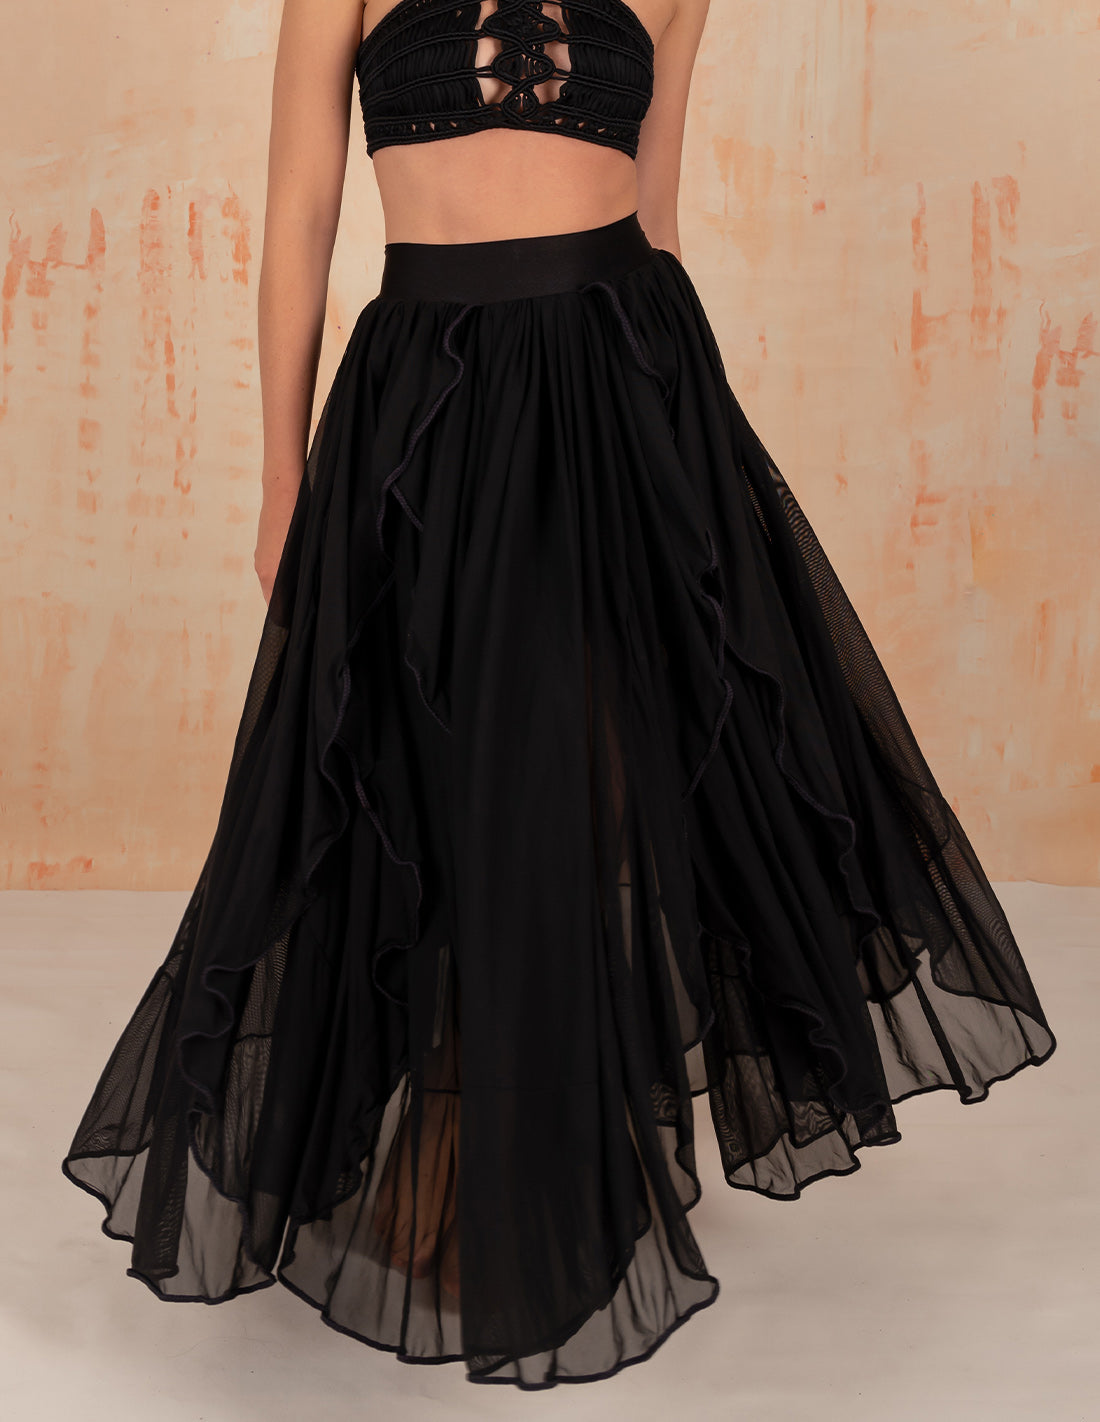 Petalos Skirt Black. Skirt With Hand Woven Macramé In Black. Entreaguas